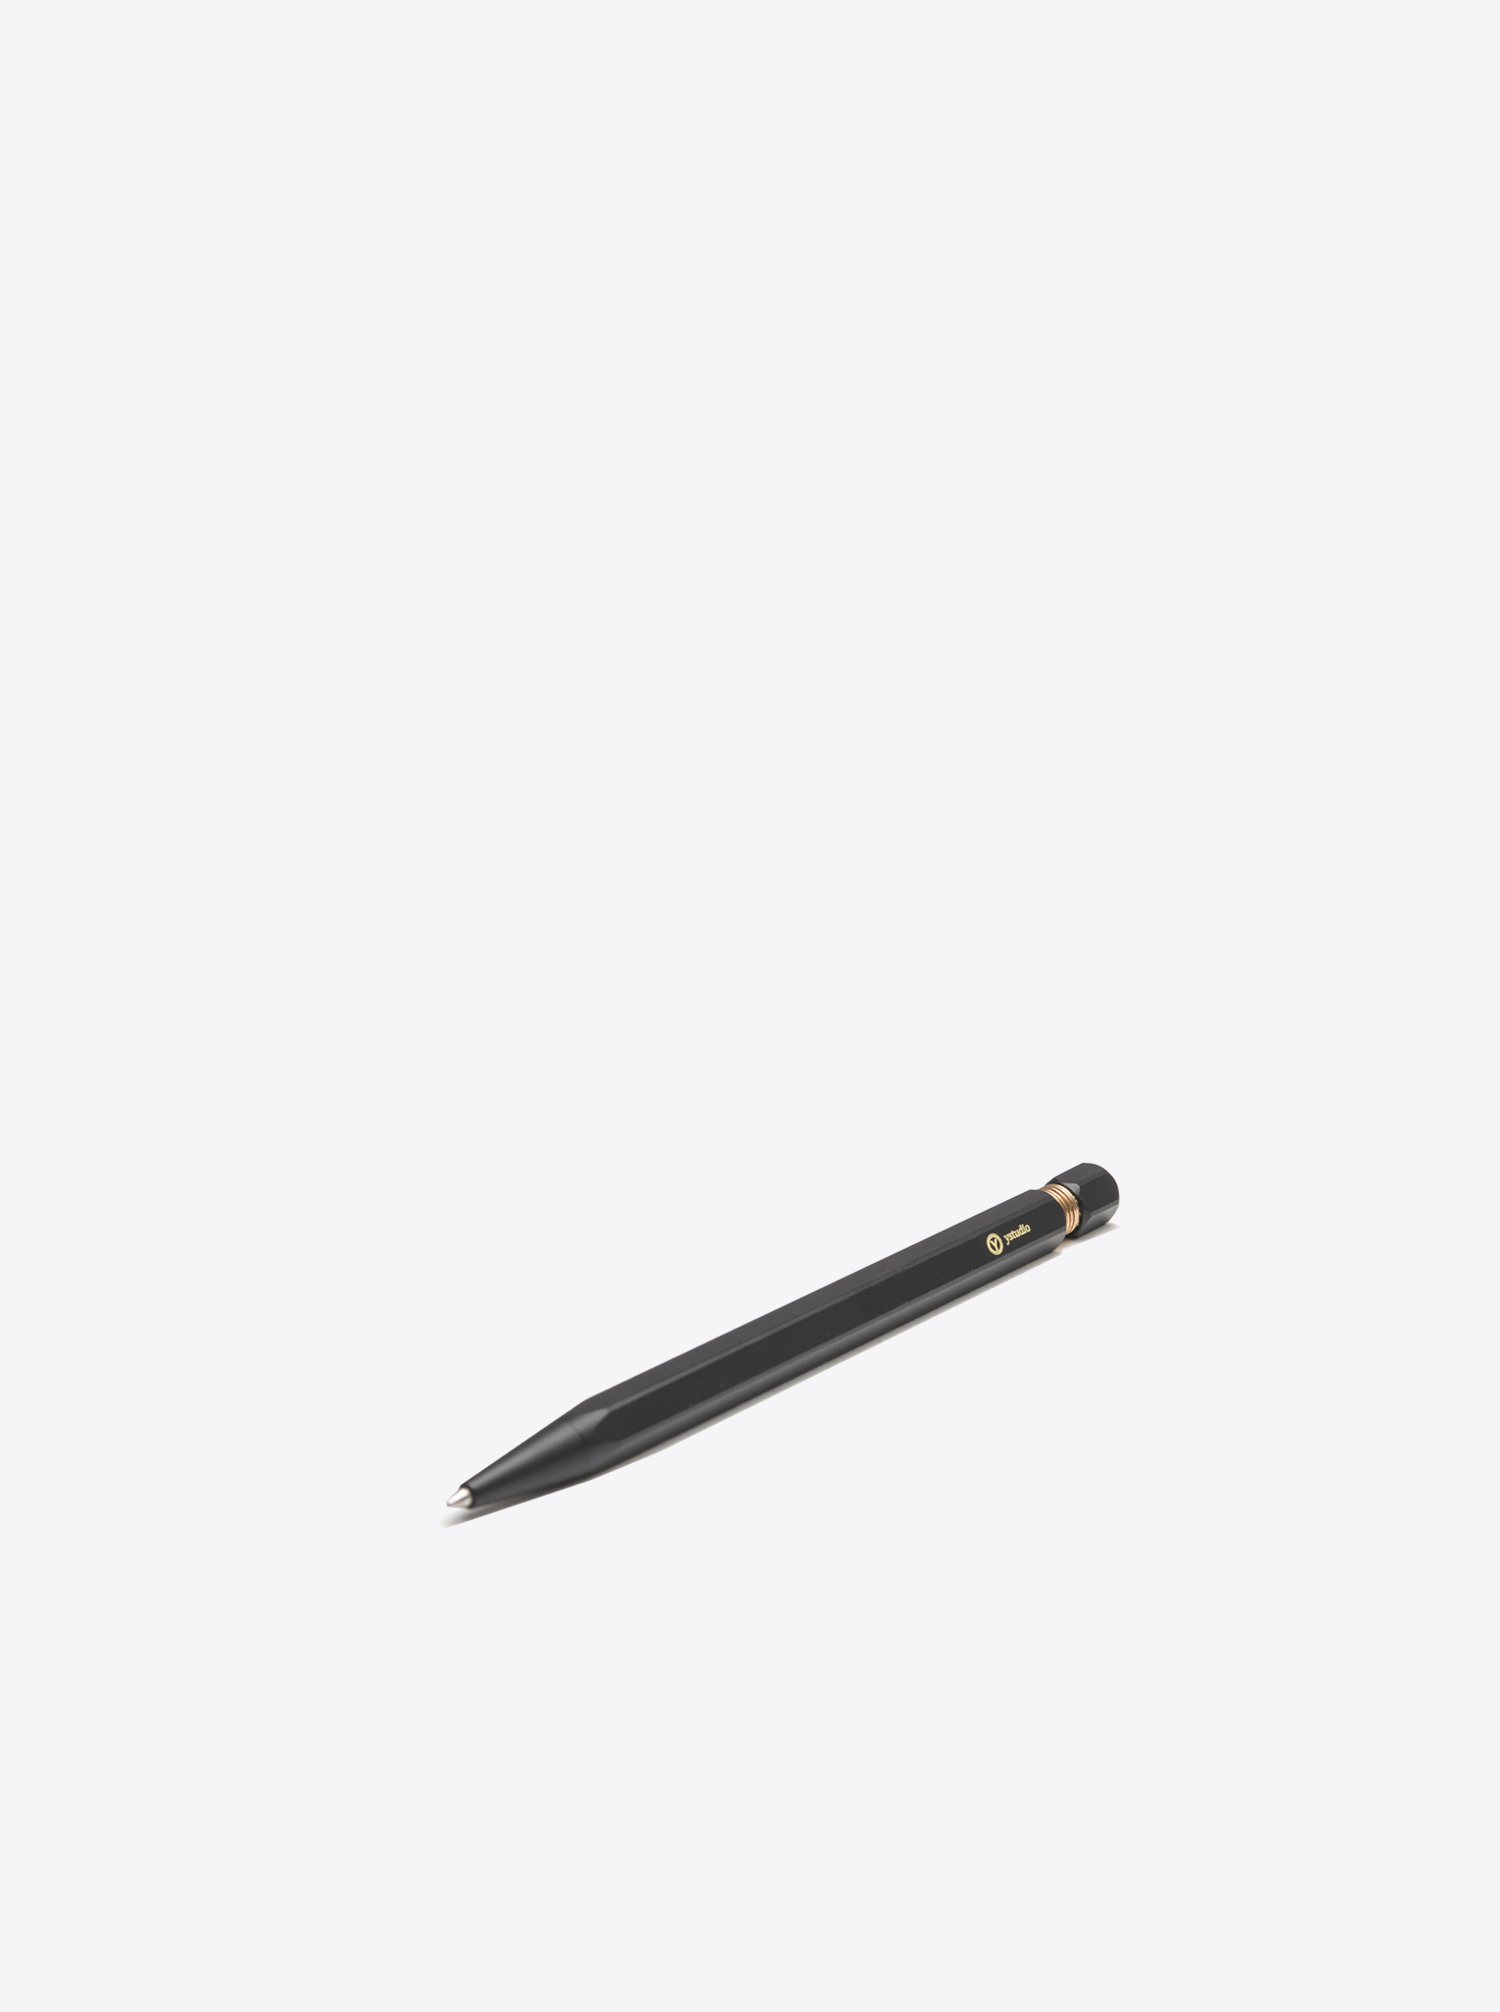 Kugelschreiber Messing schwarz